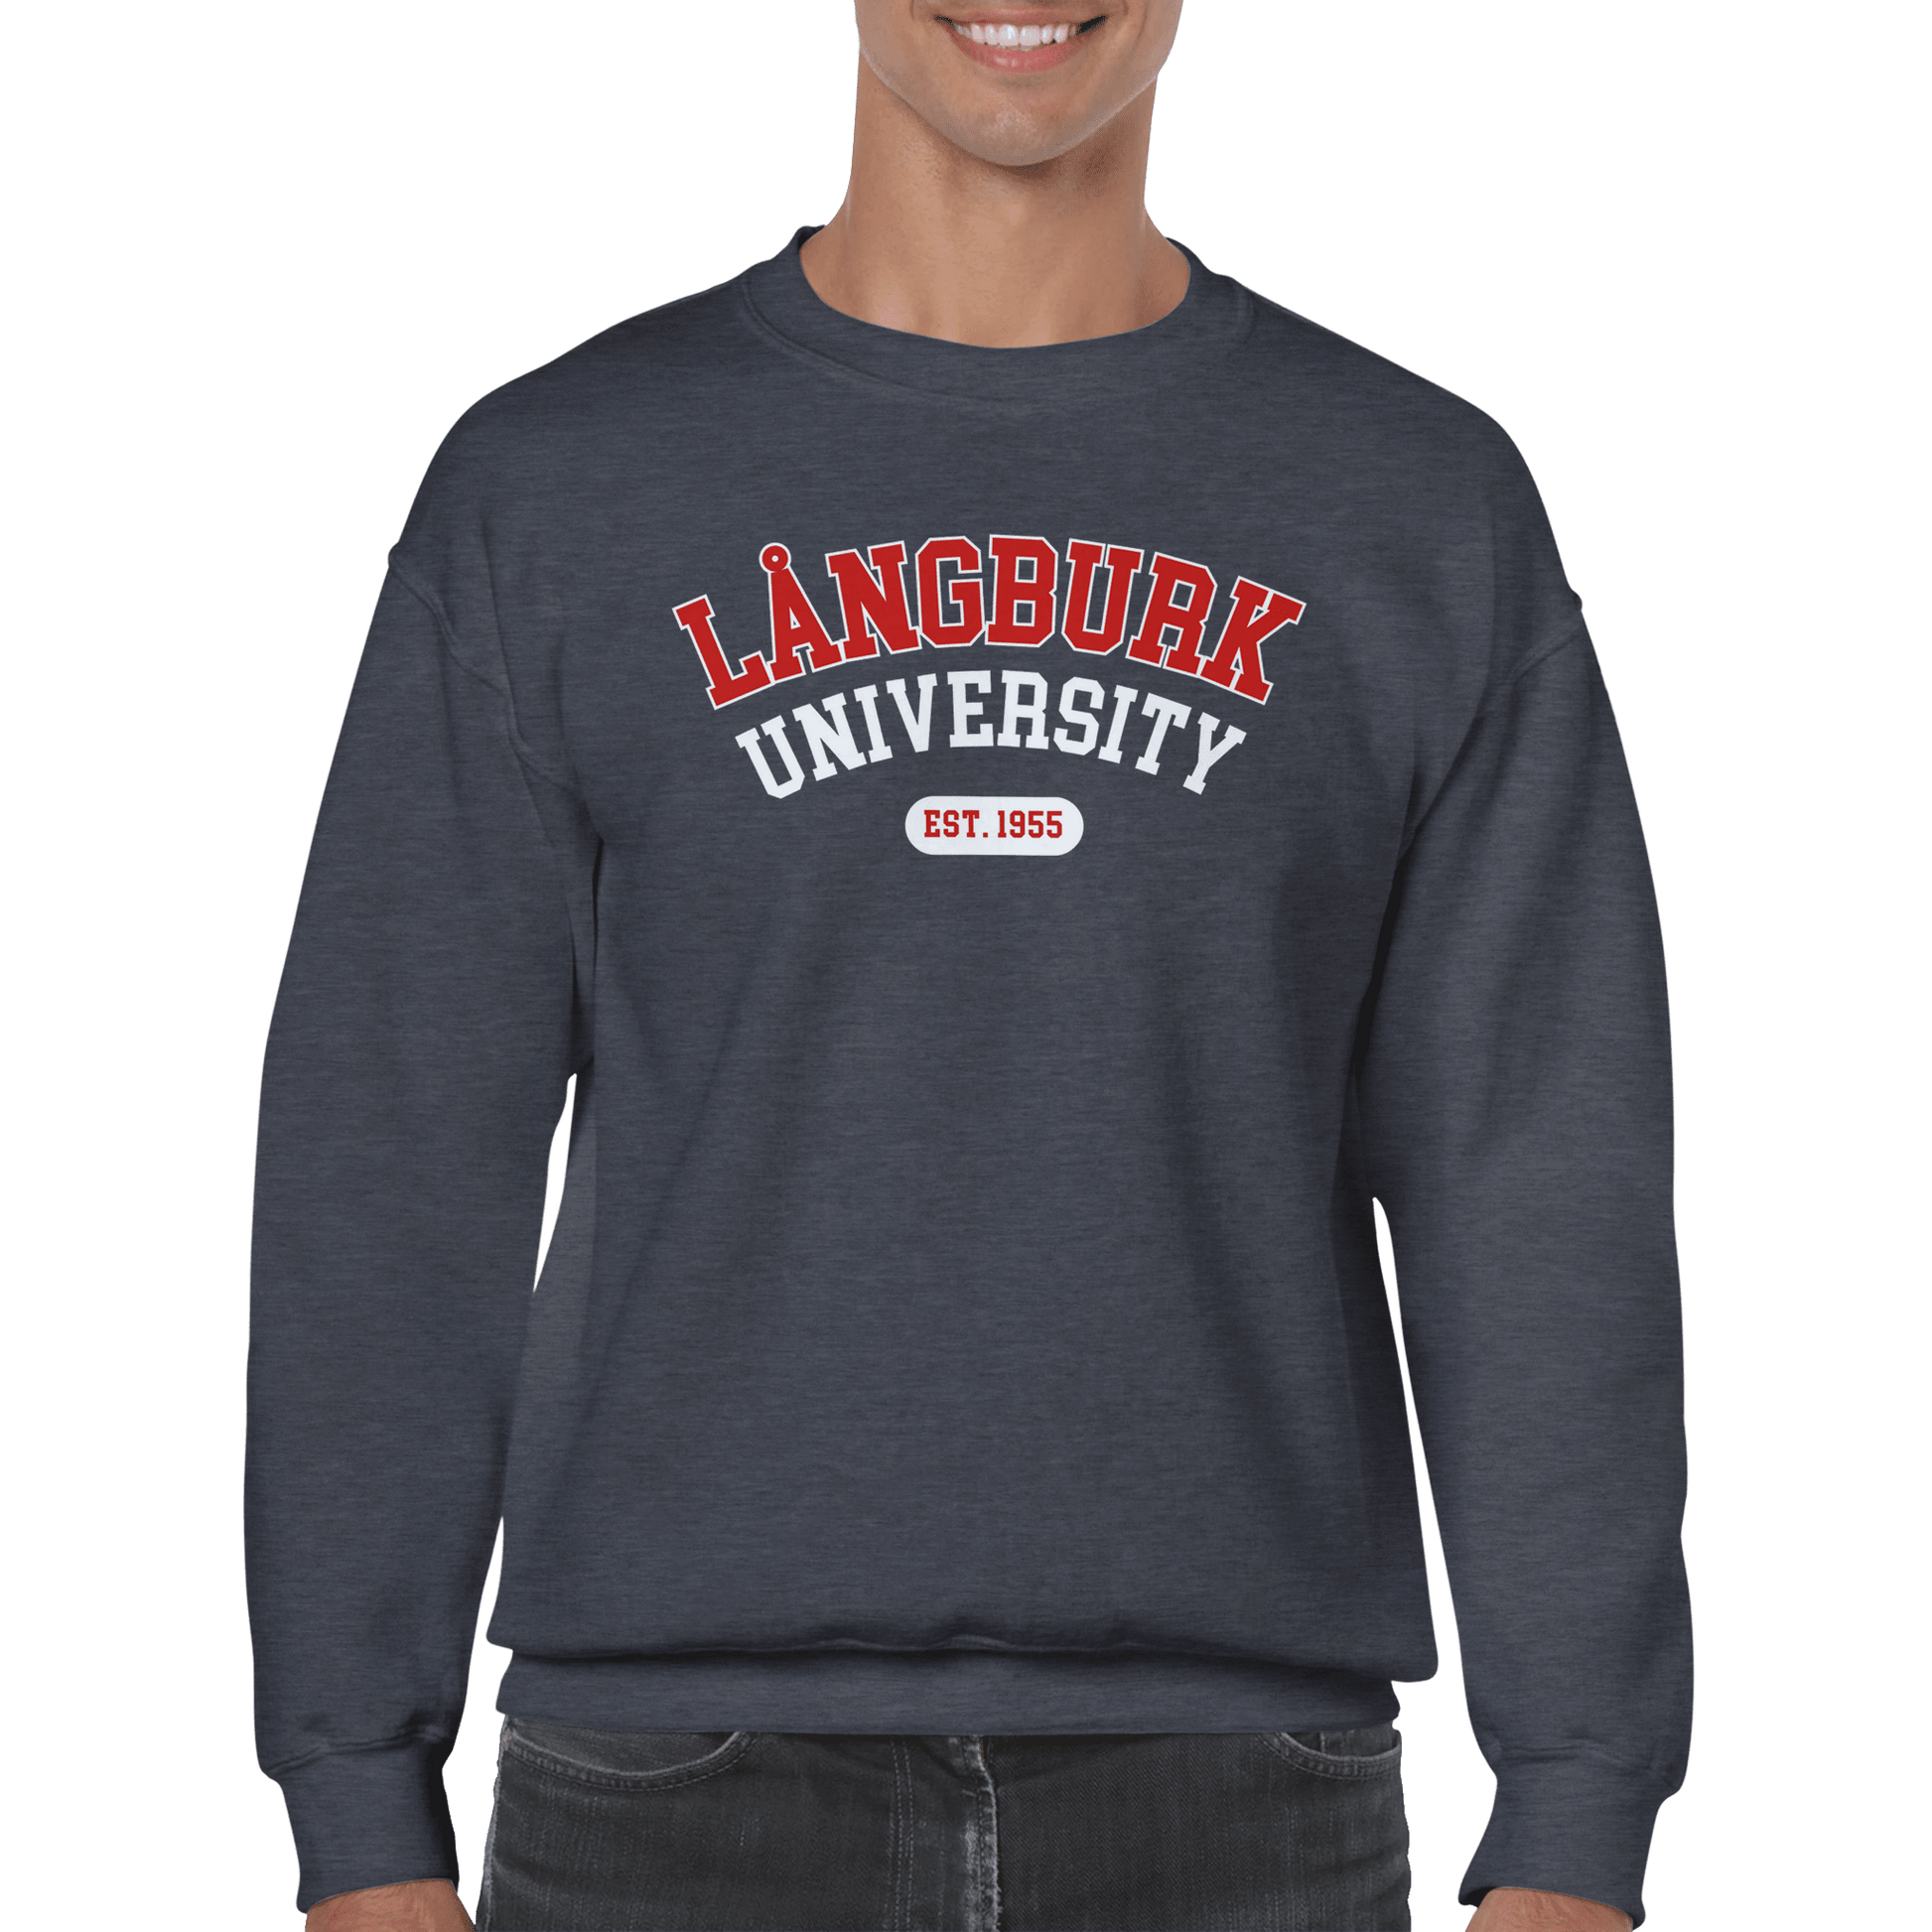 Långburk University Est. 1955 - Sweatshirt 